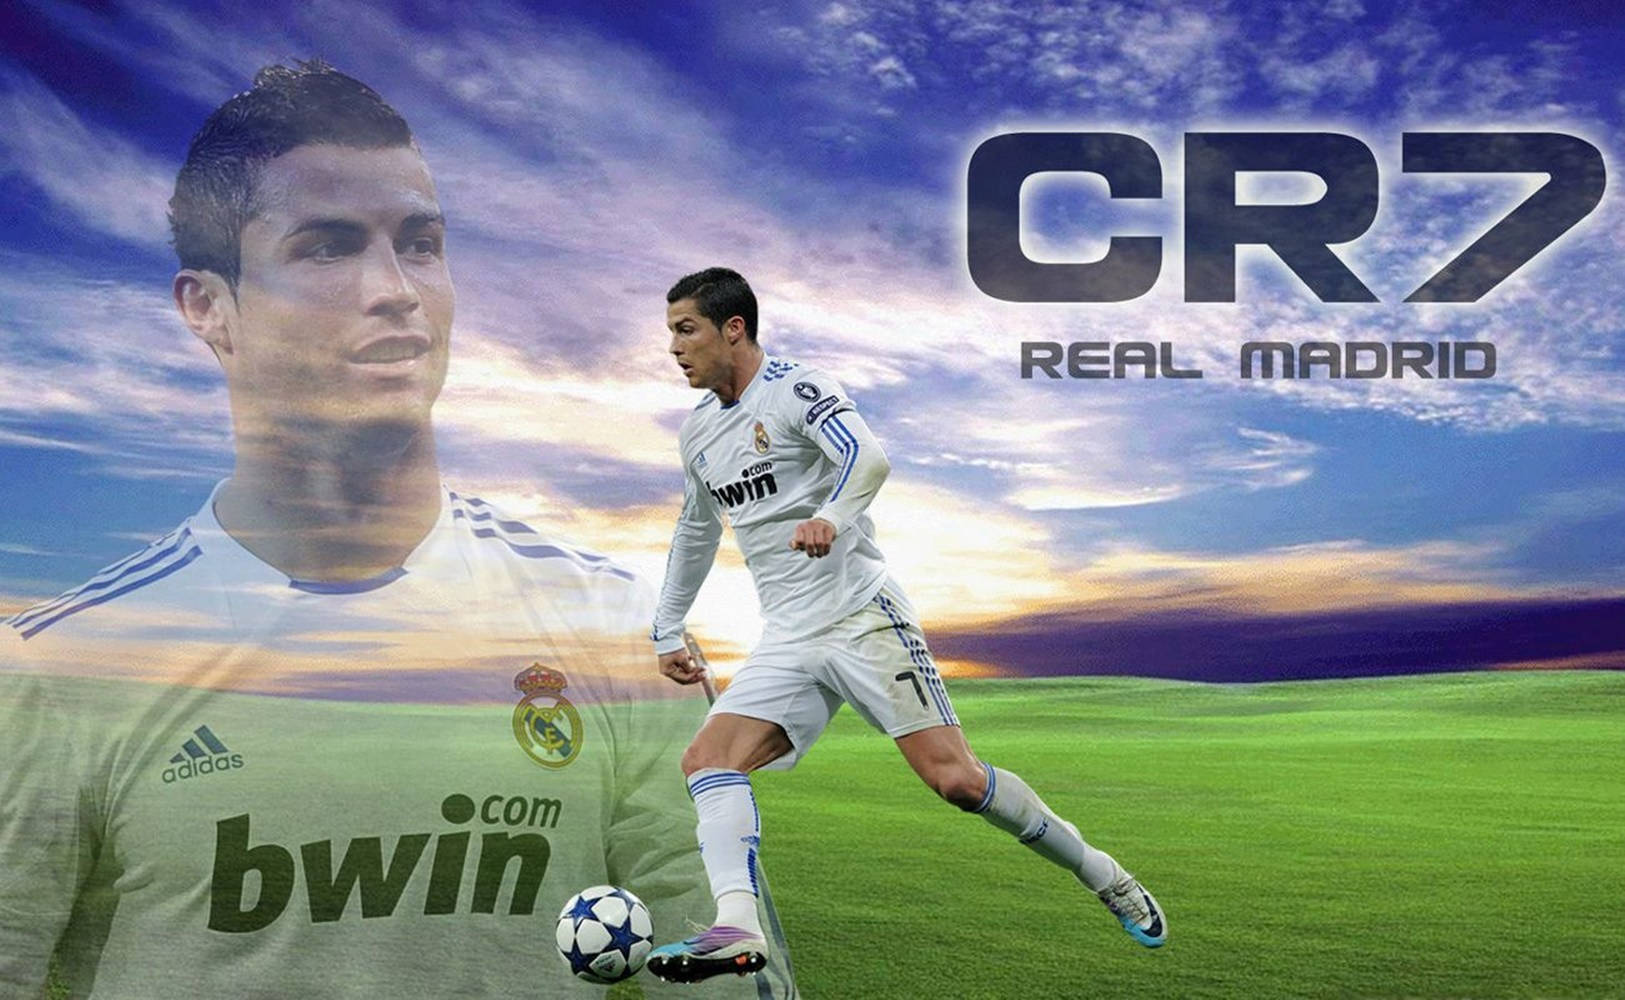 Cristiano Ronaldo Cool Real Madrid Football Field